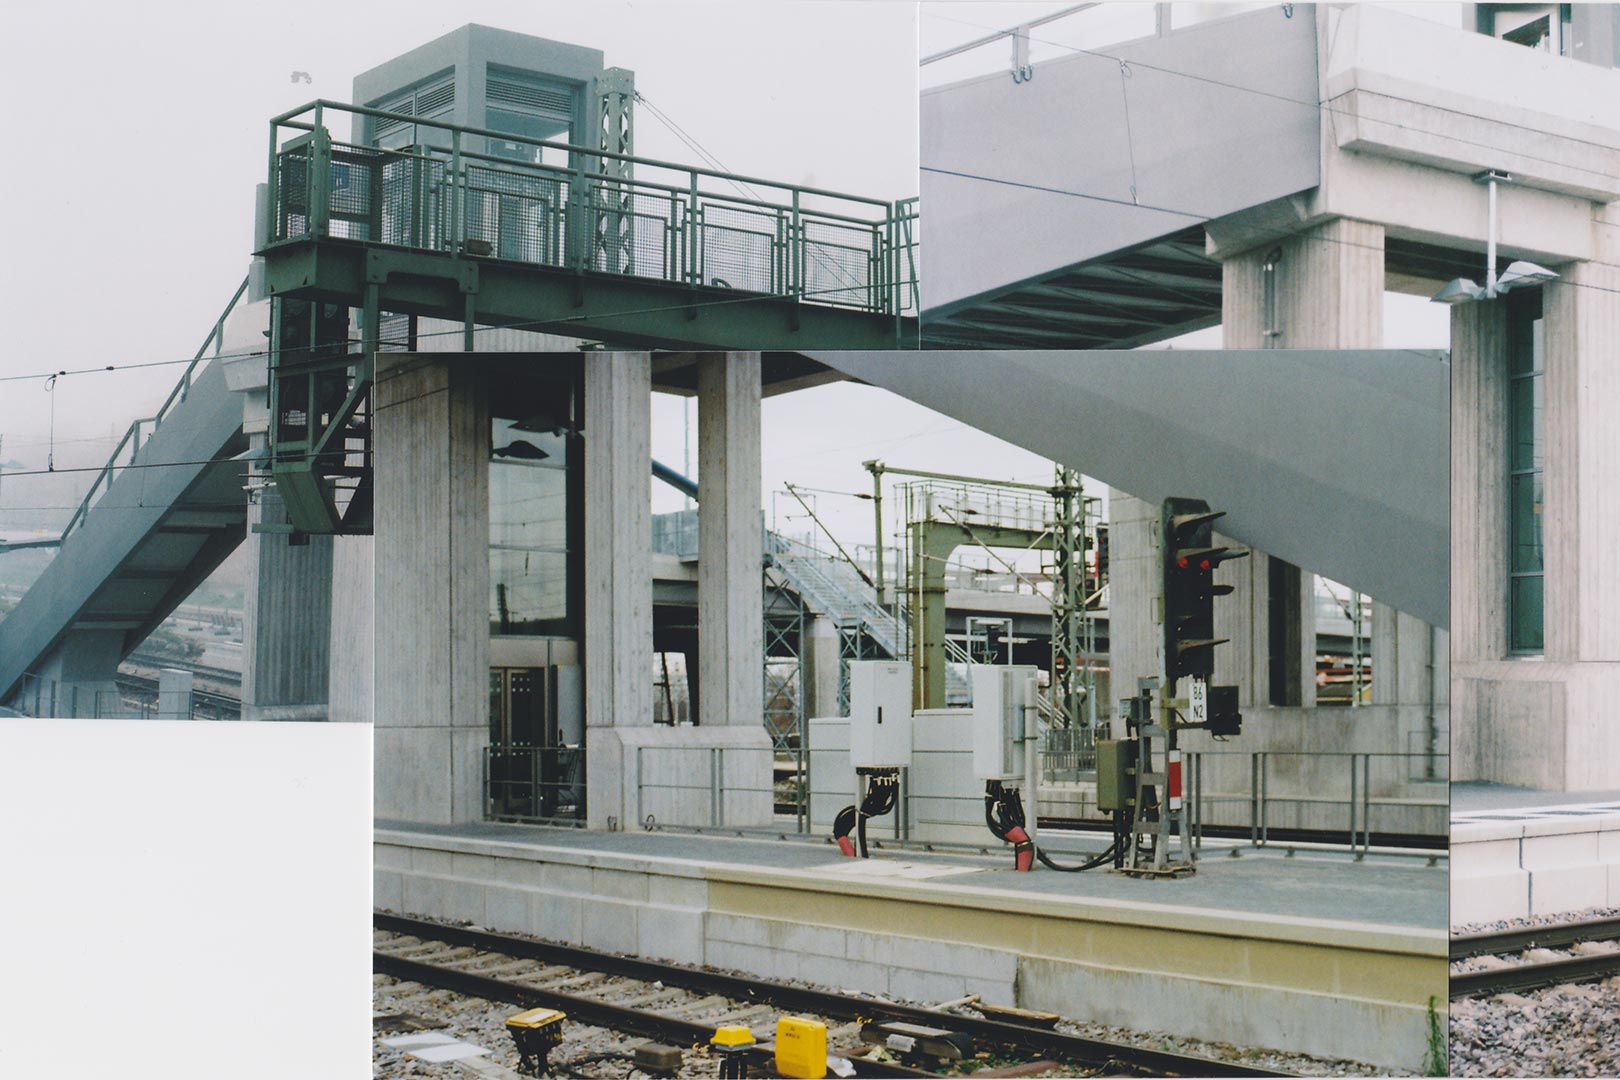 Gallery Refugium analog photography collage of a railway platform